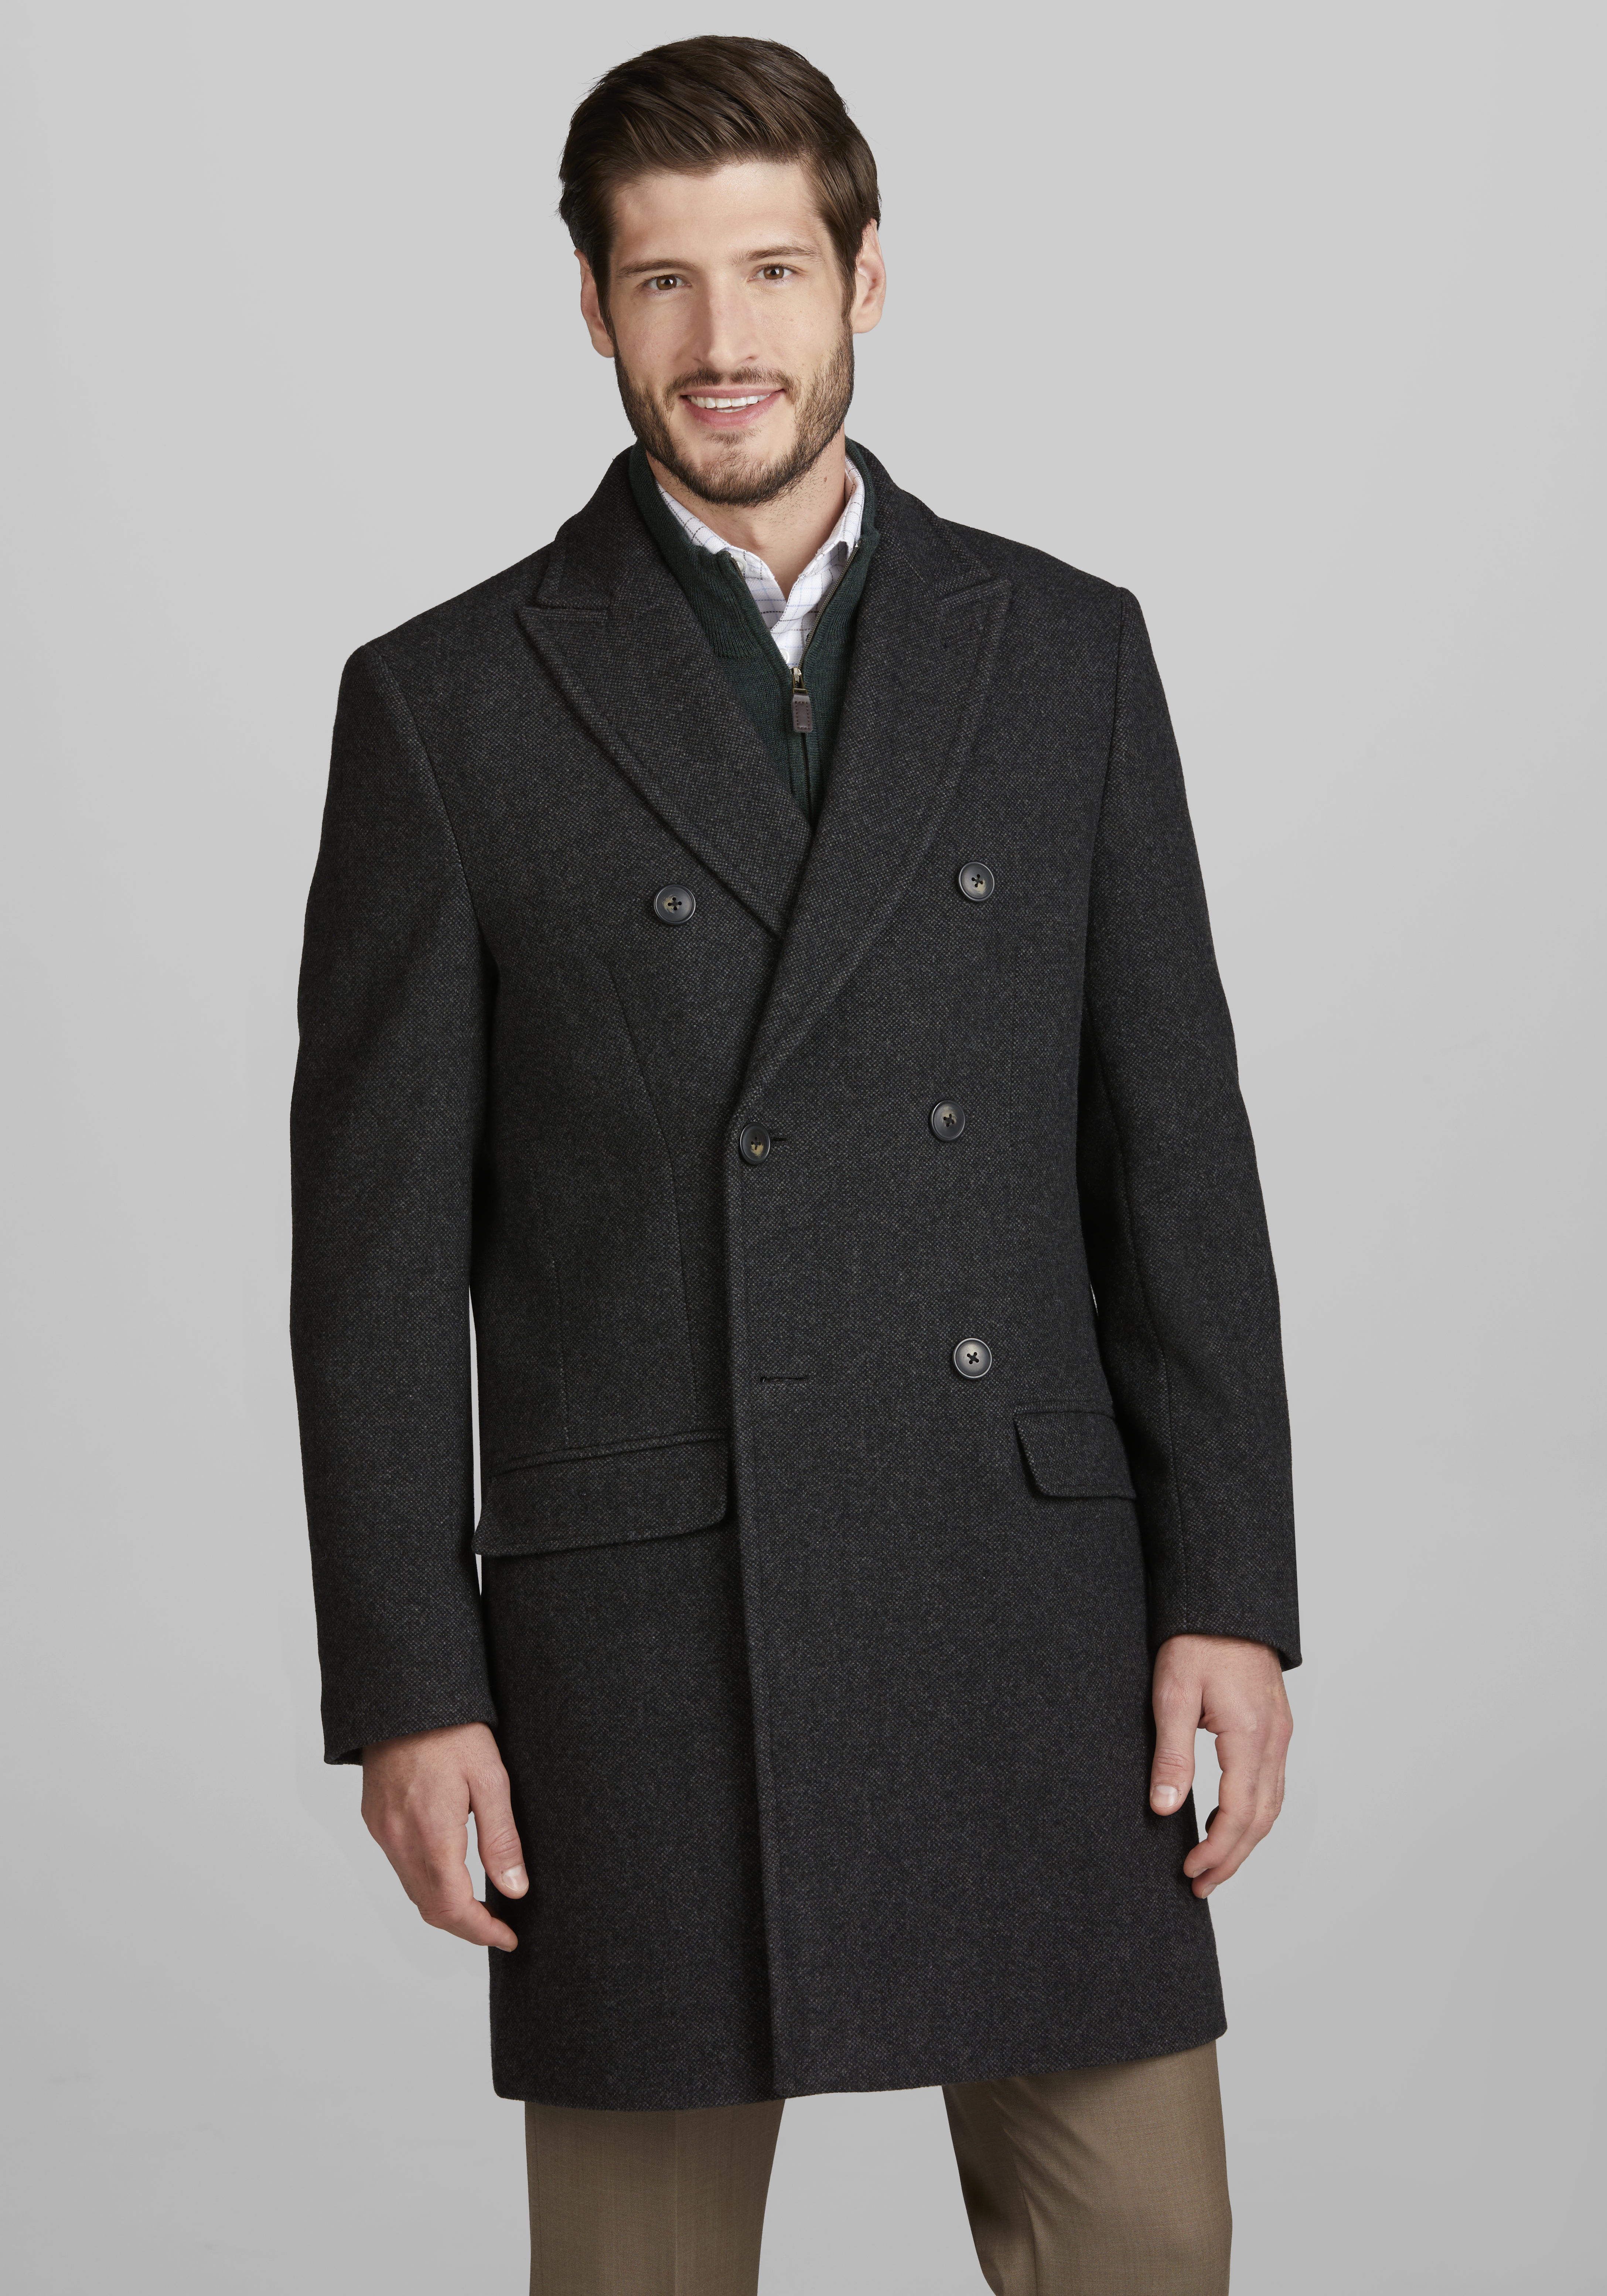 Men's Outerwear, Coats & Jackets | Men's Outerwear | JoS. A. Bank